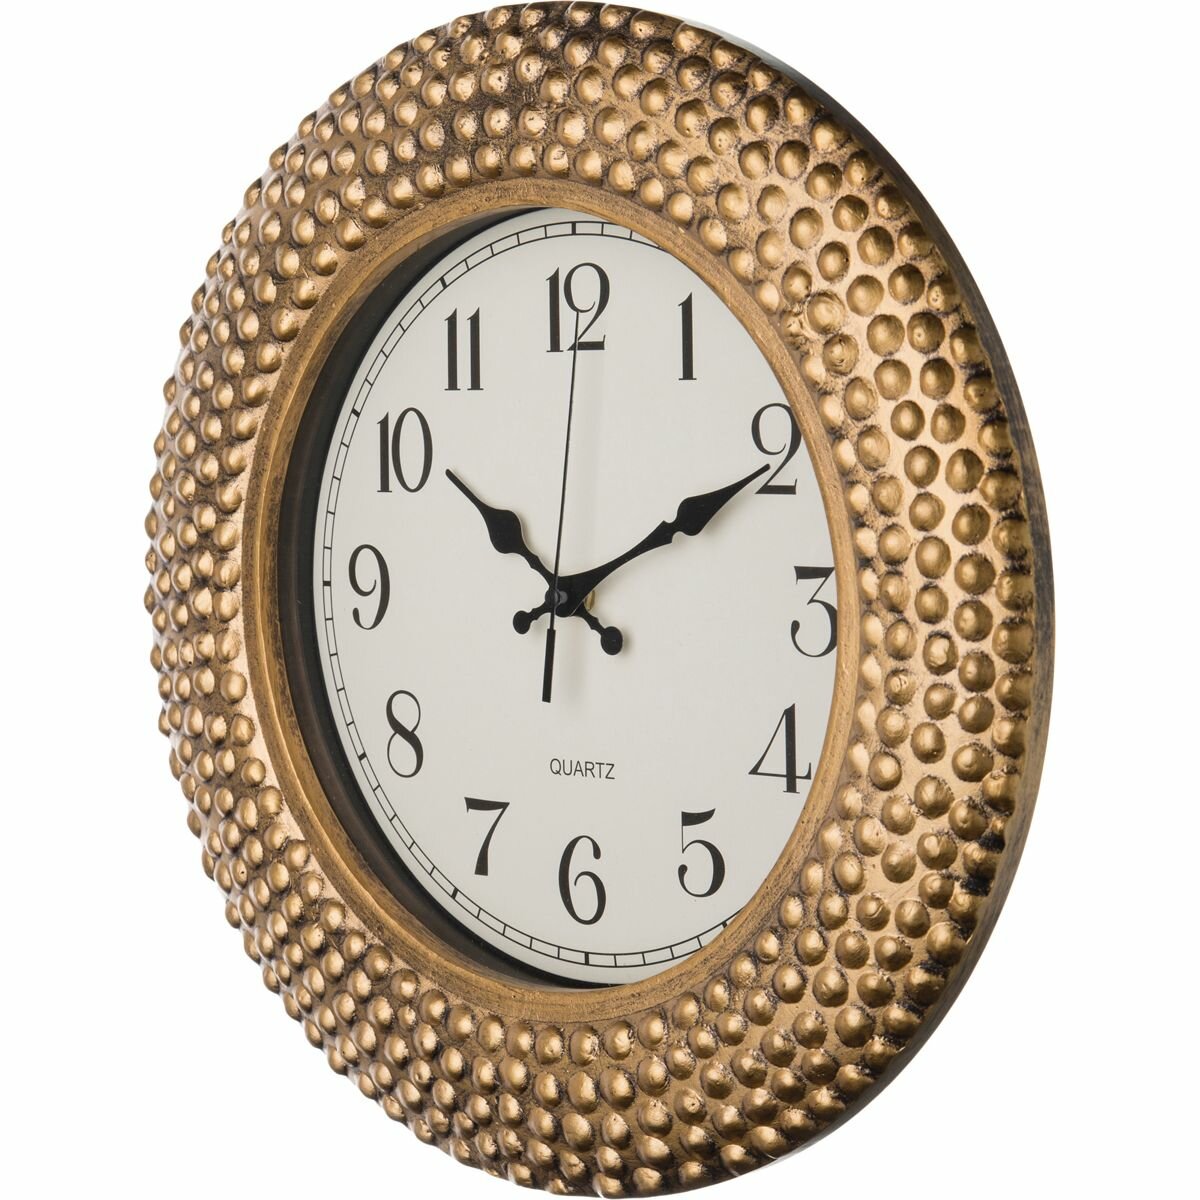 Lefard Часы Italian Style цвет: античное золото (38 см)